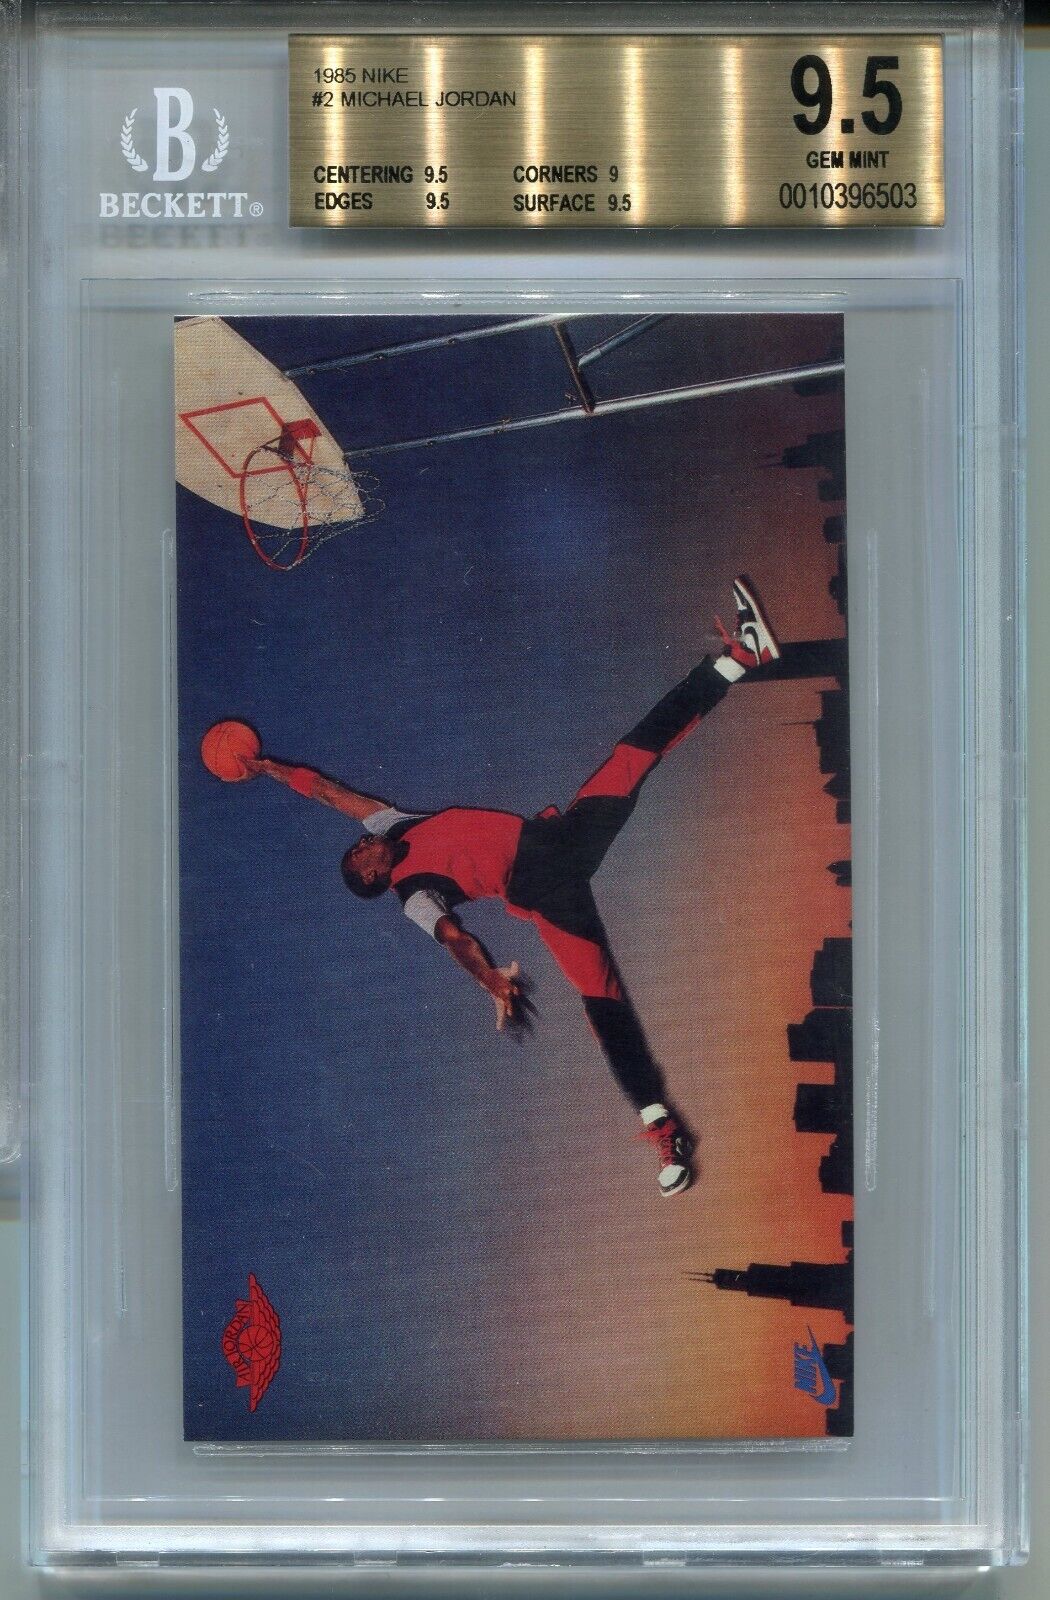 1985 Nike Basketball #2 Michael Jordan Rookie Card XRC Graded BGS 9.5 Gem Mint